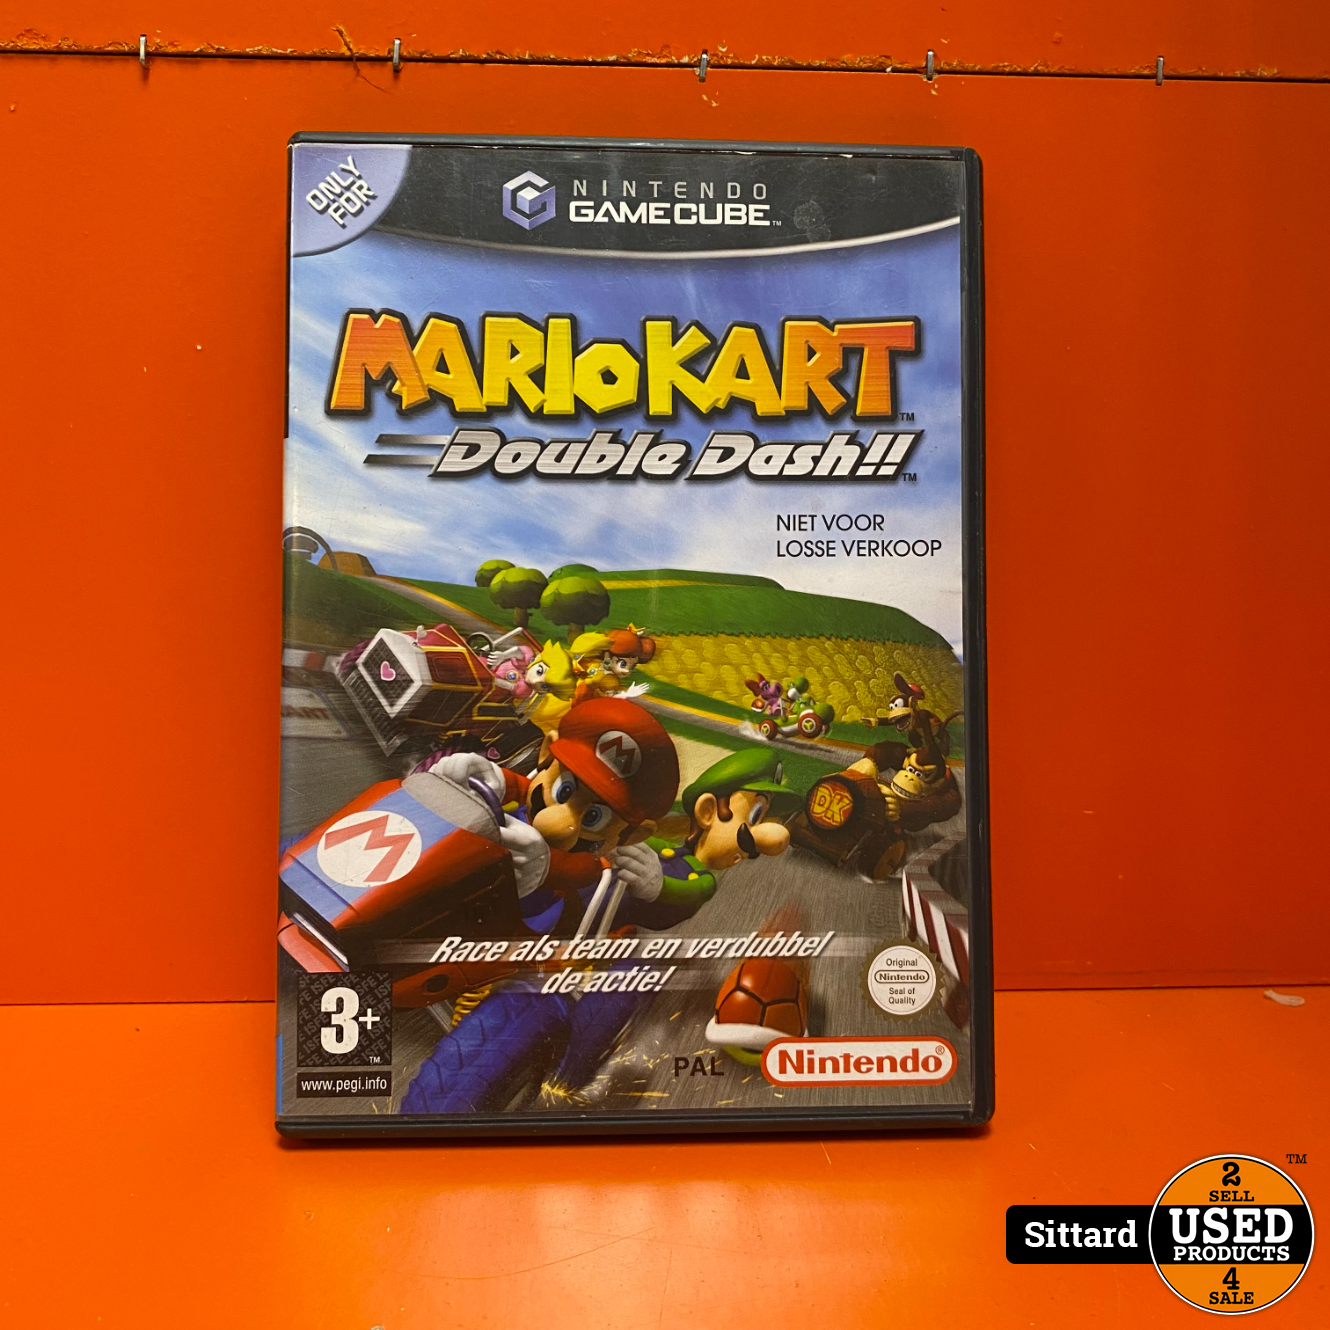 nintendo Mario Kart Double Nintendo Gamecube - Used Products Sittard